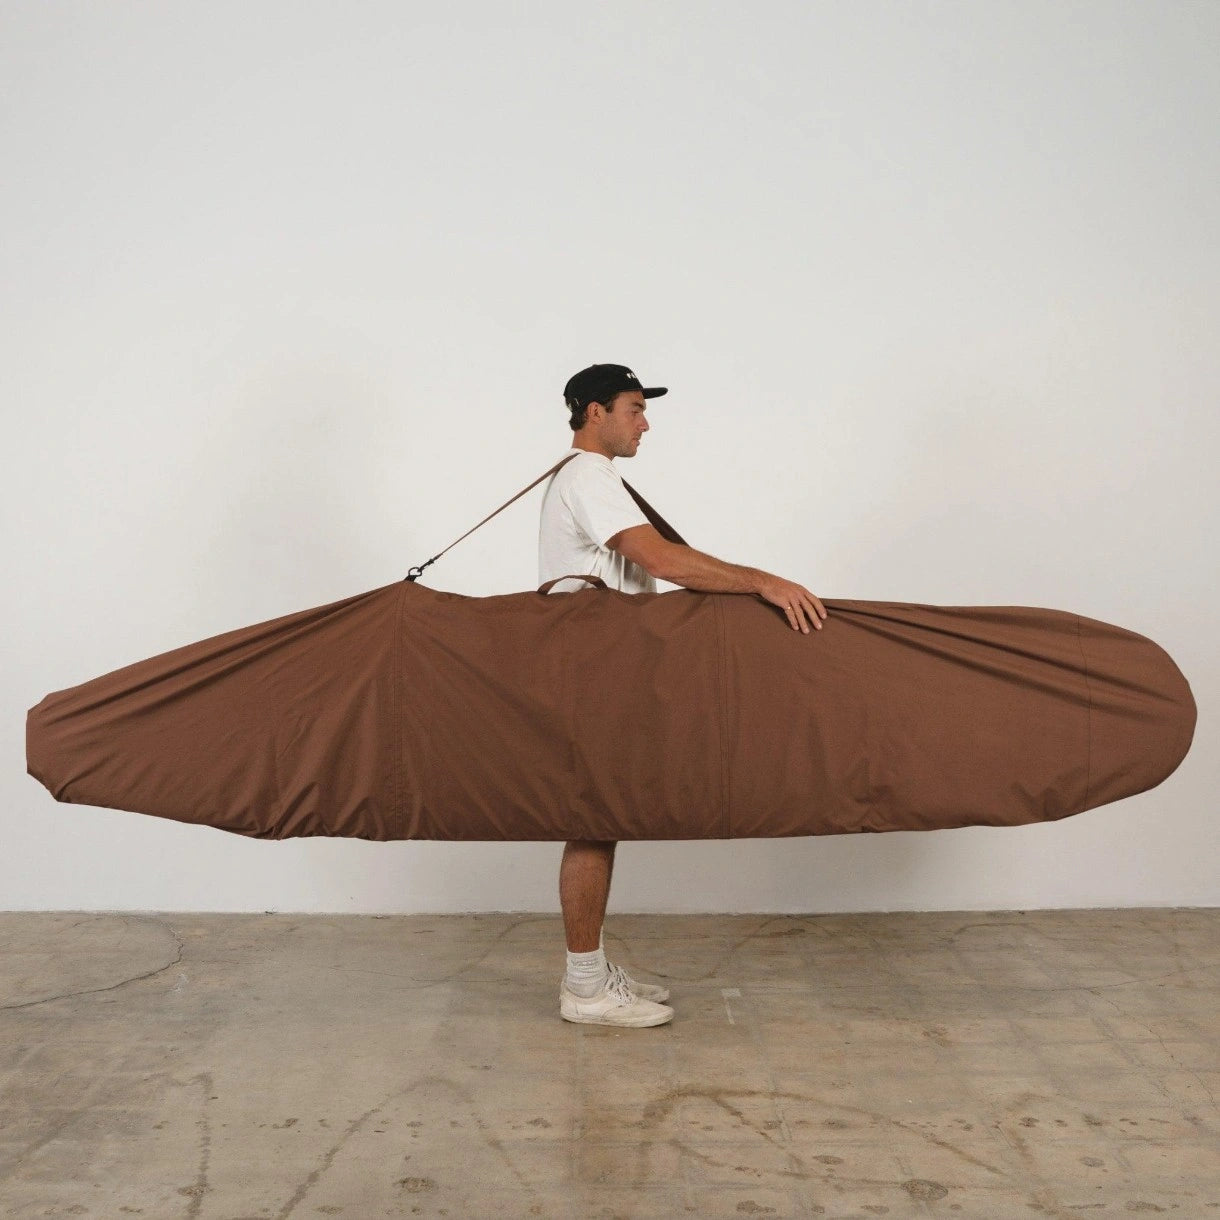 10ft canvas surfboard bag